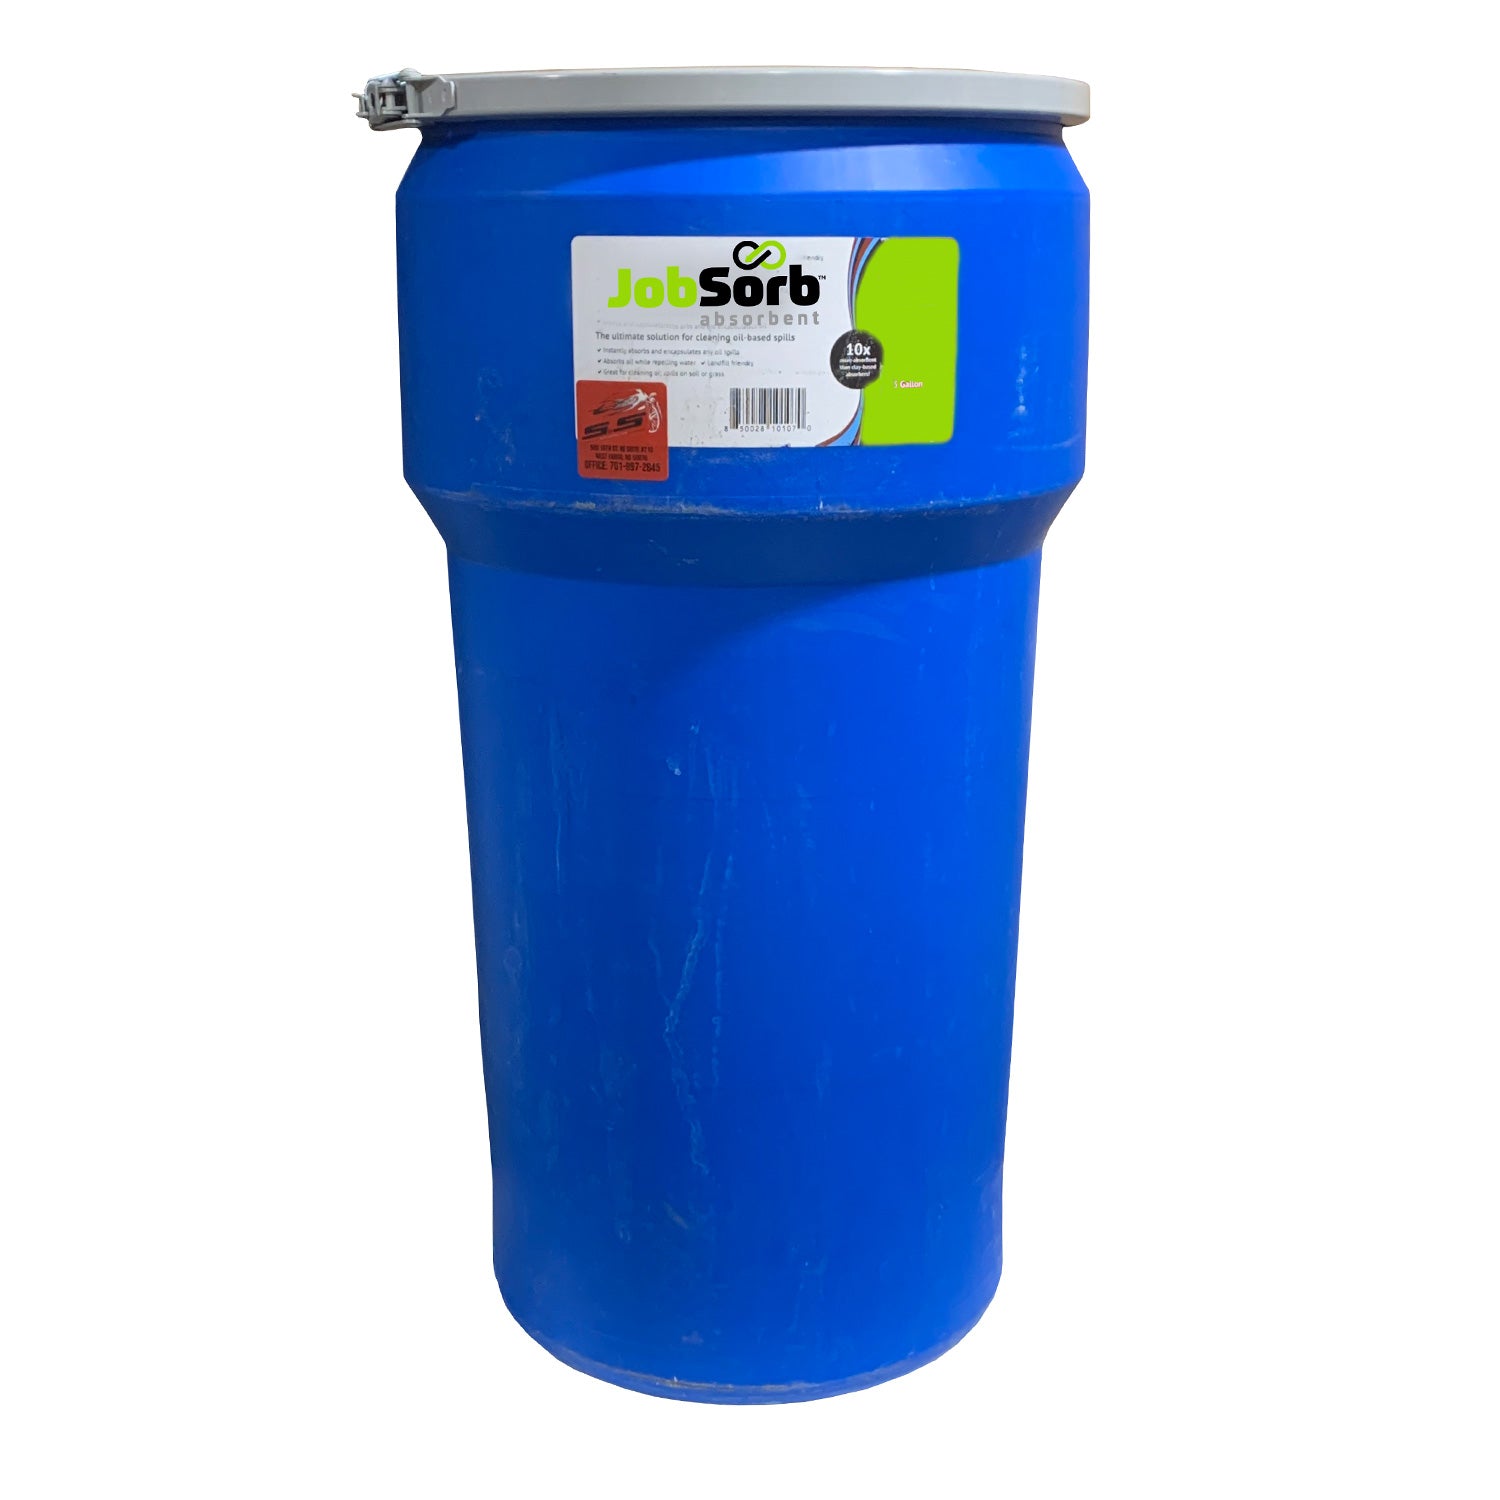 jobsorb-absorbent-material-20-gallon-drum